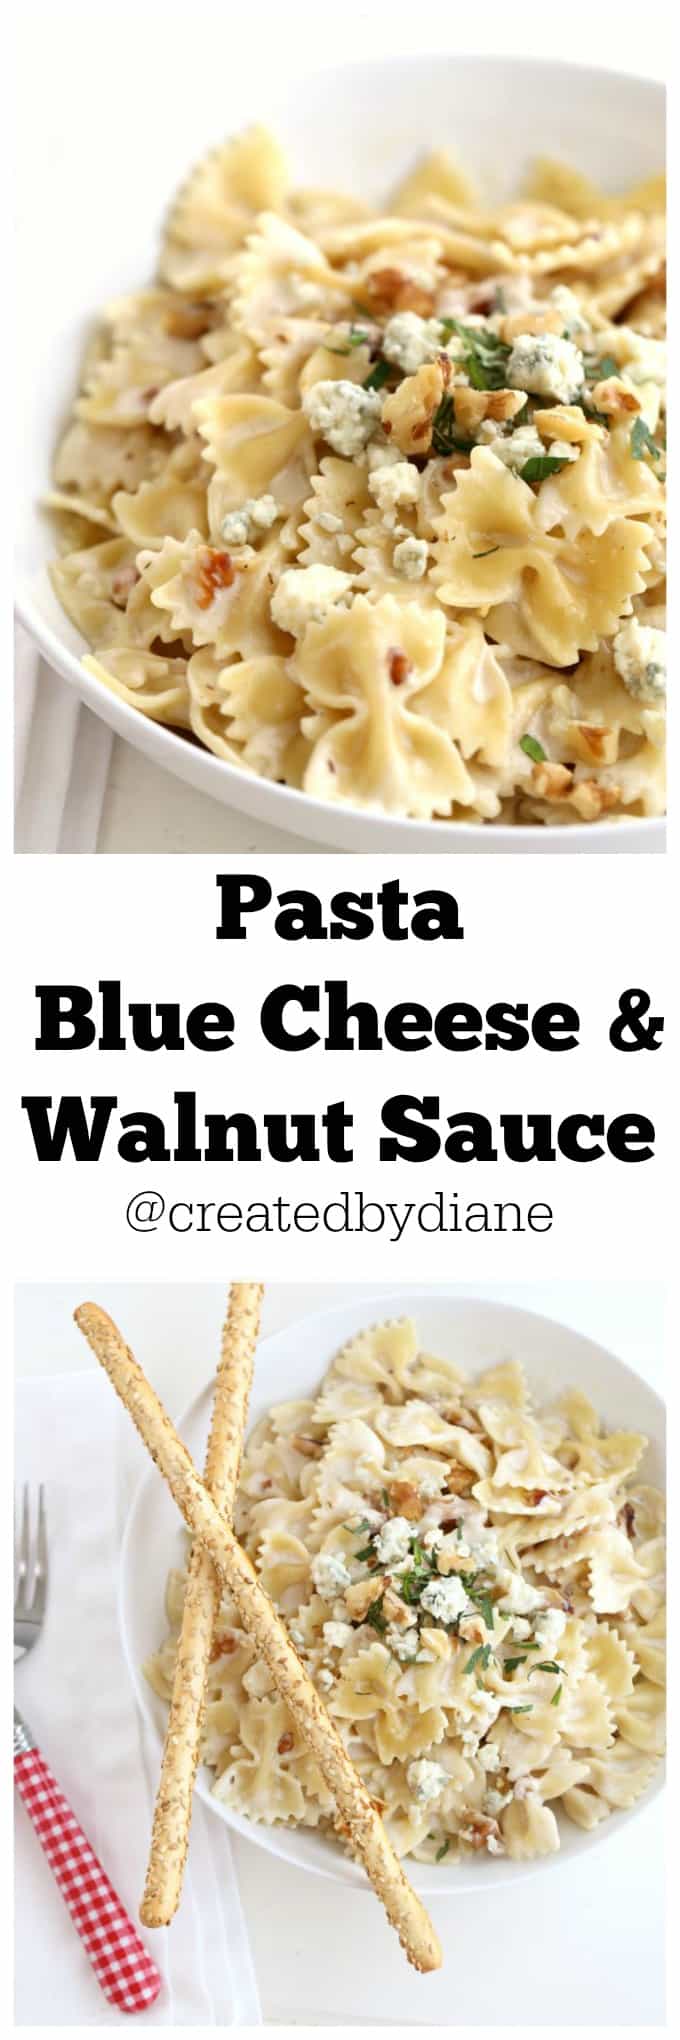 pasta blue cheese and walnut sauce @createdbydiane